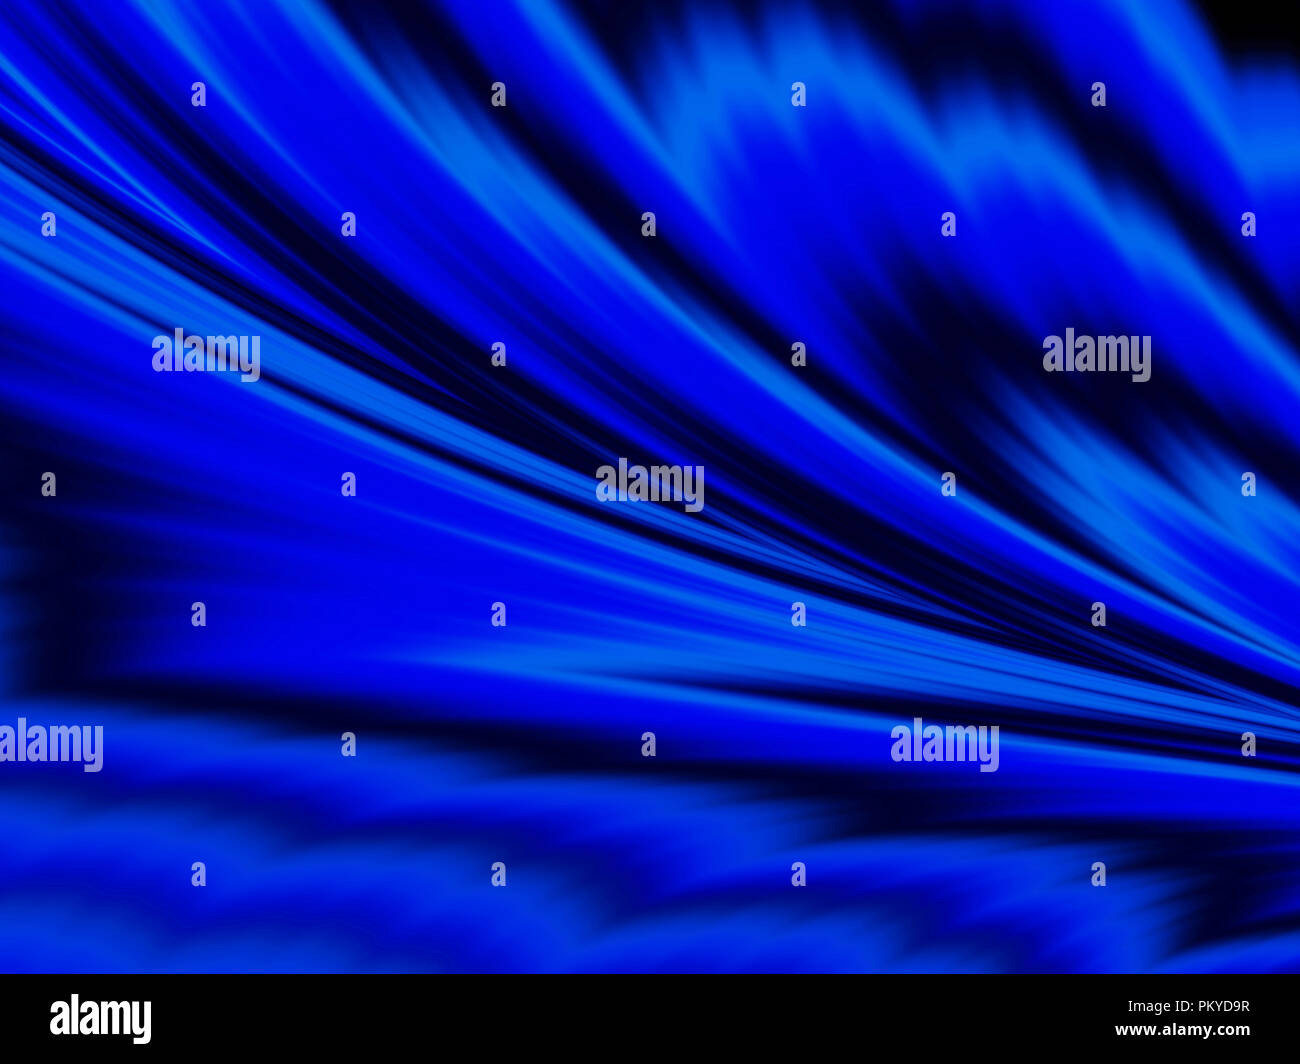 Beautiful deep blue coloir of digitally created fractal image ideal for desktop wallpaper background Stock Photo